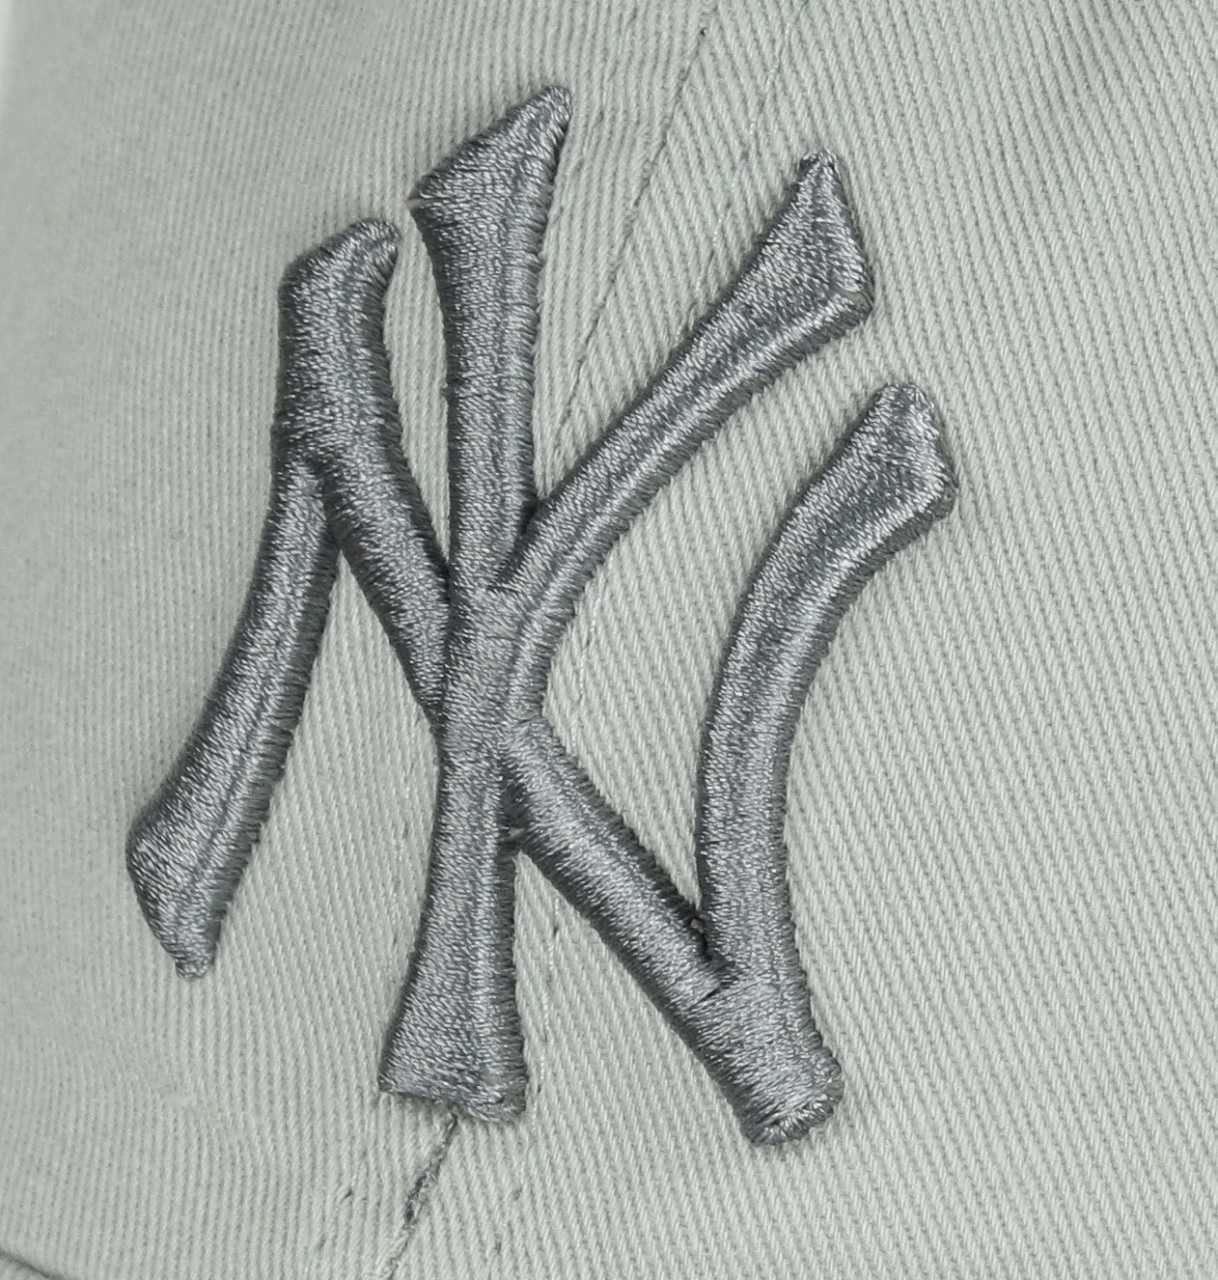 New York Yankees MLB Clean Up Tonal Grey Adjustable Cap 47 Brand 